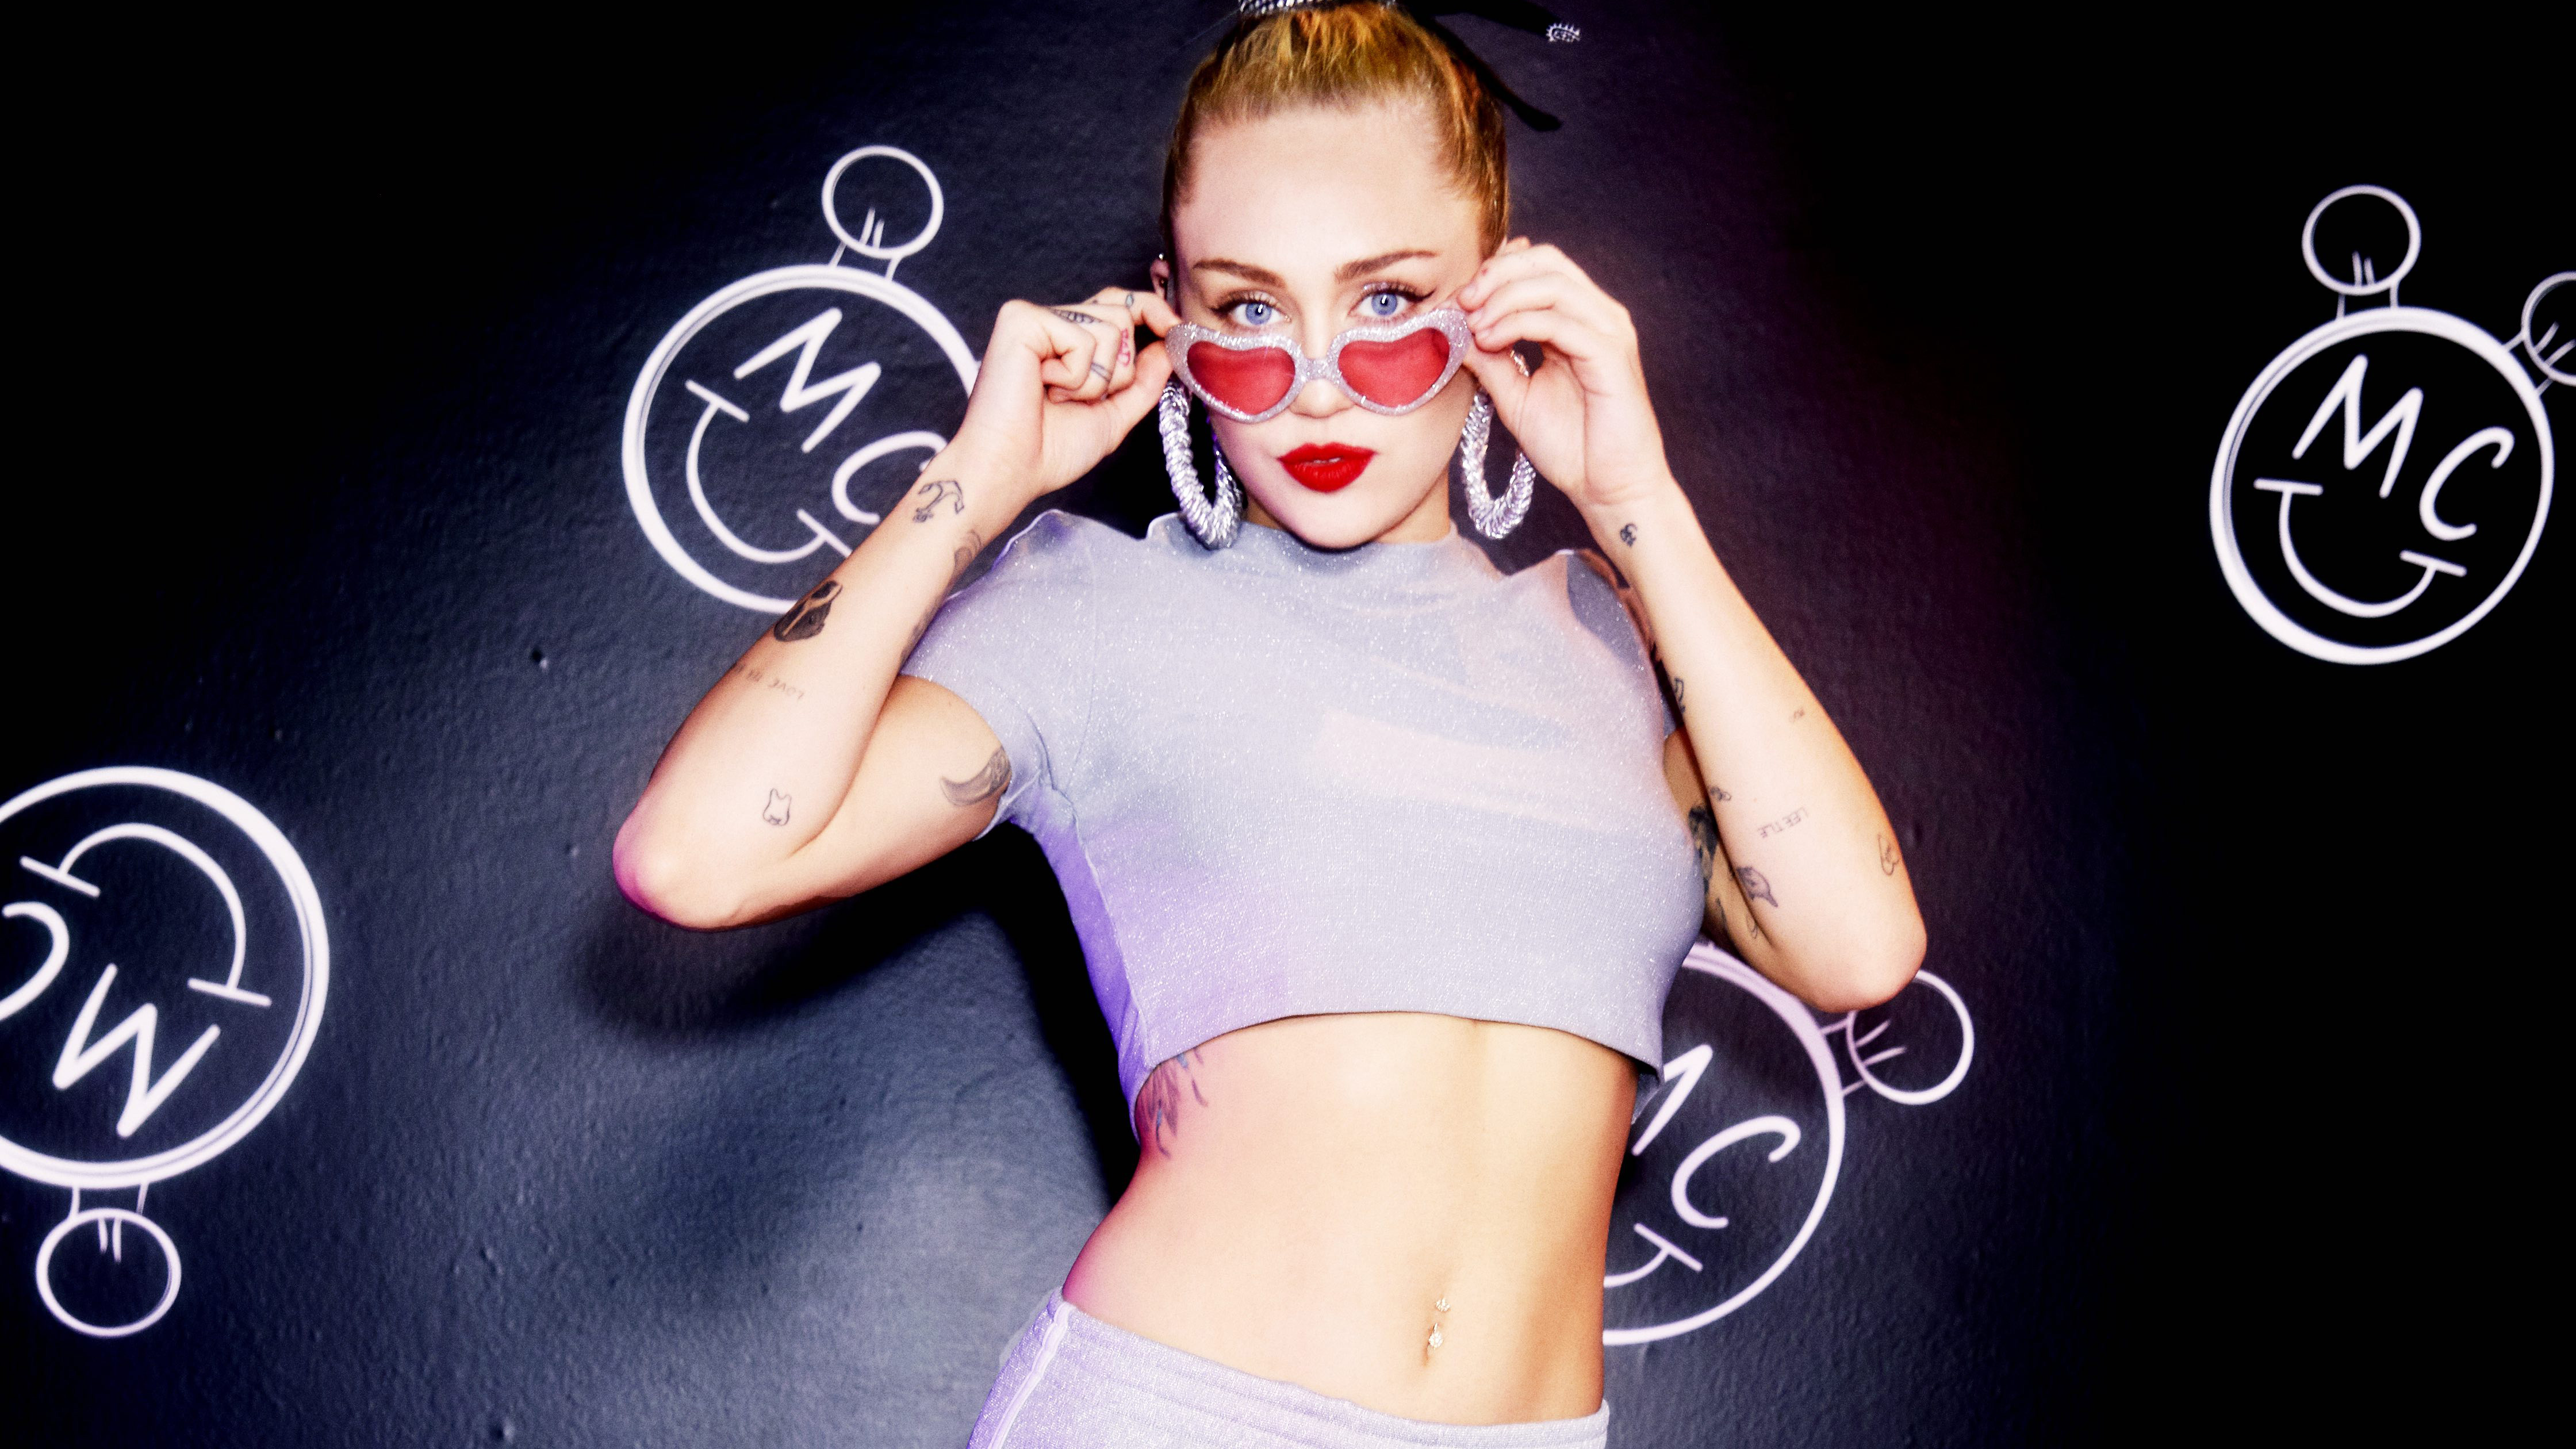 4k Converse Miley Cyrus Photoshoot